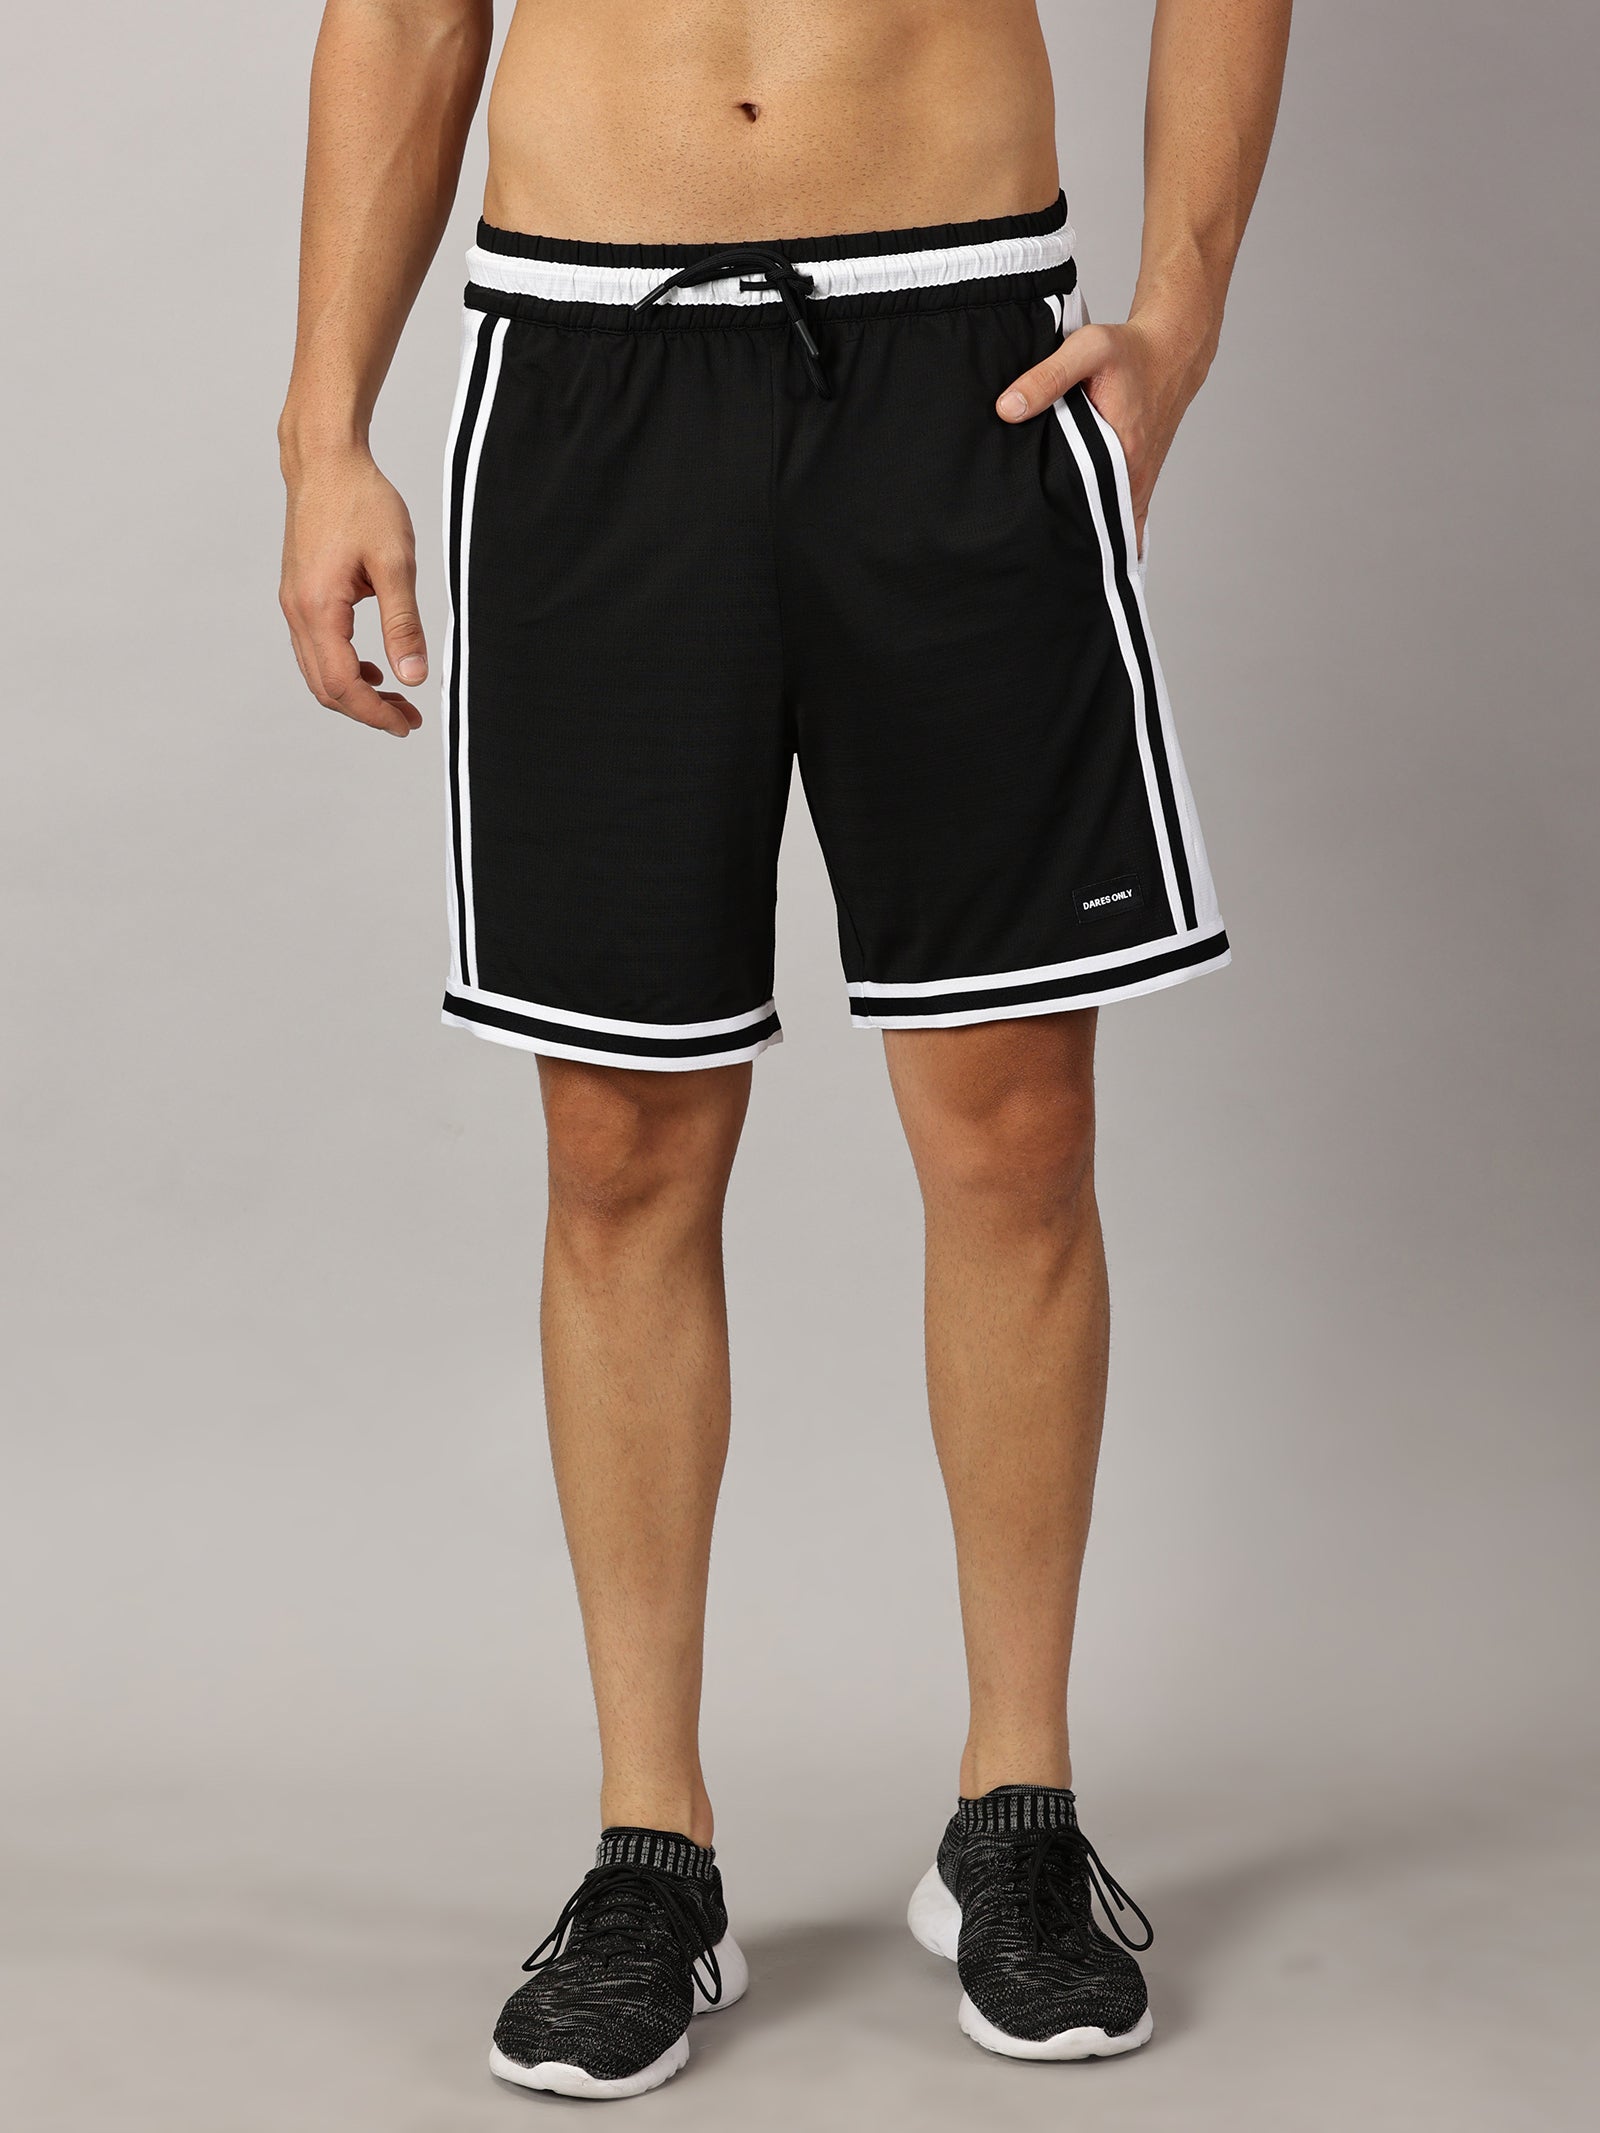 Defy Gravity Basketball shorts Black and White